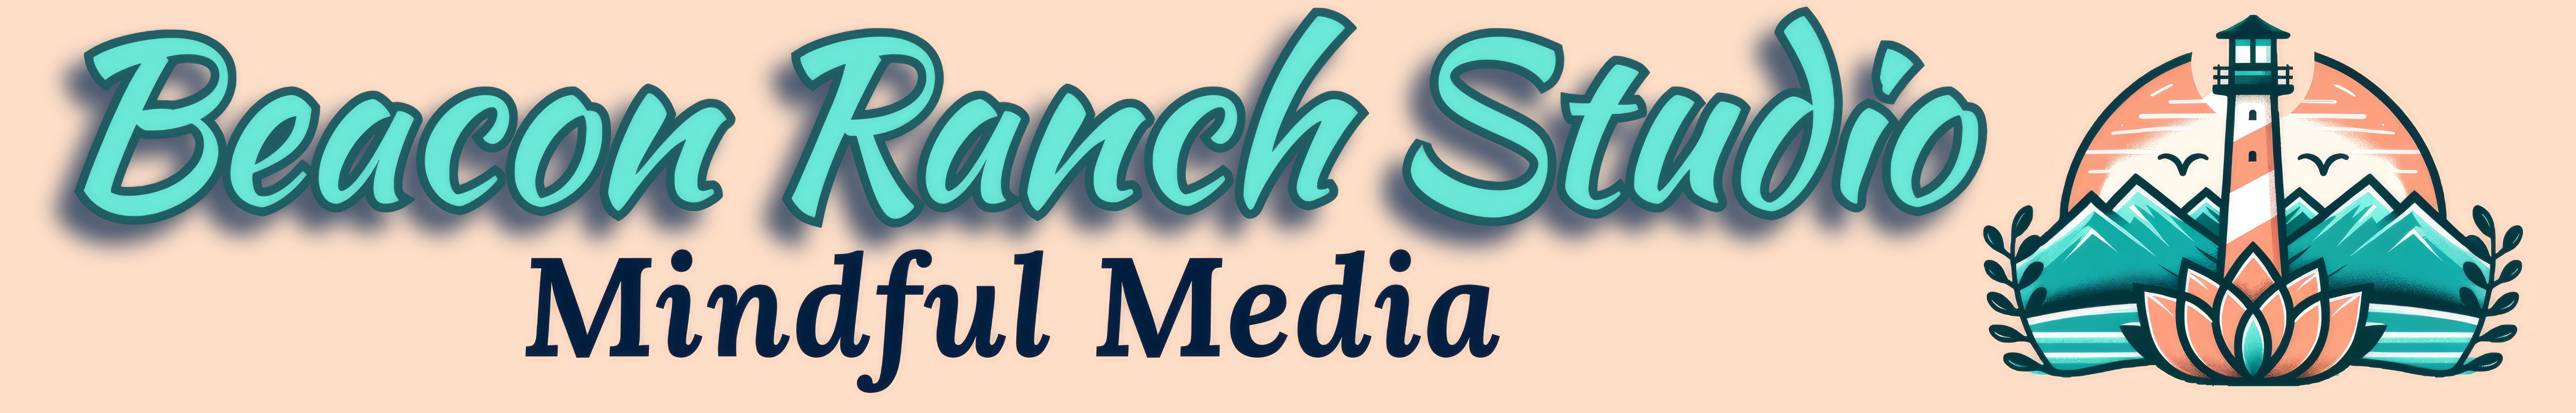 Beacon Ranch Studio| Mindful Media